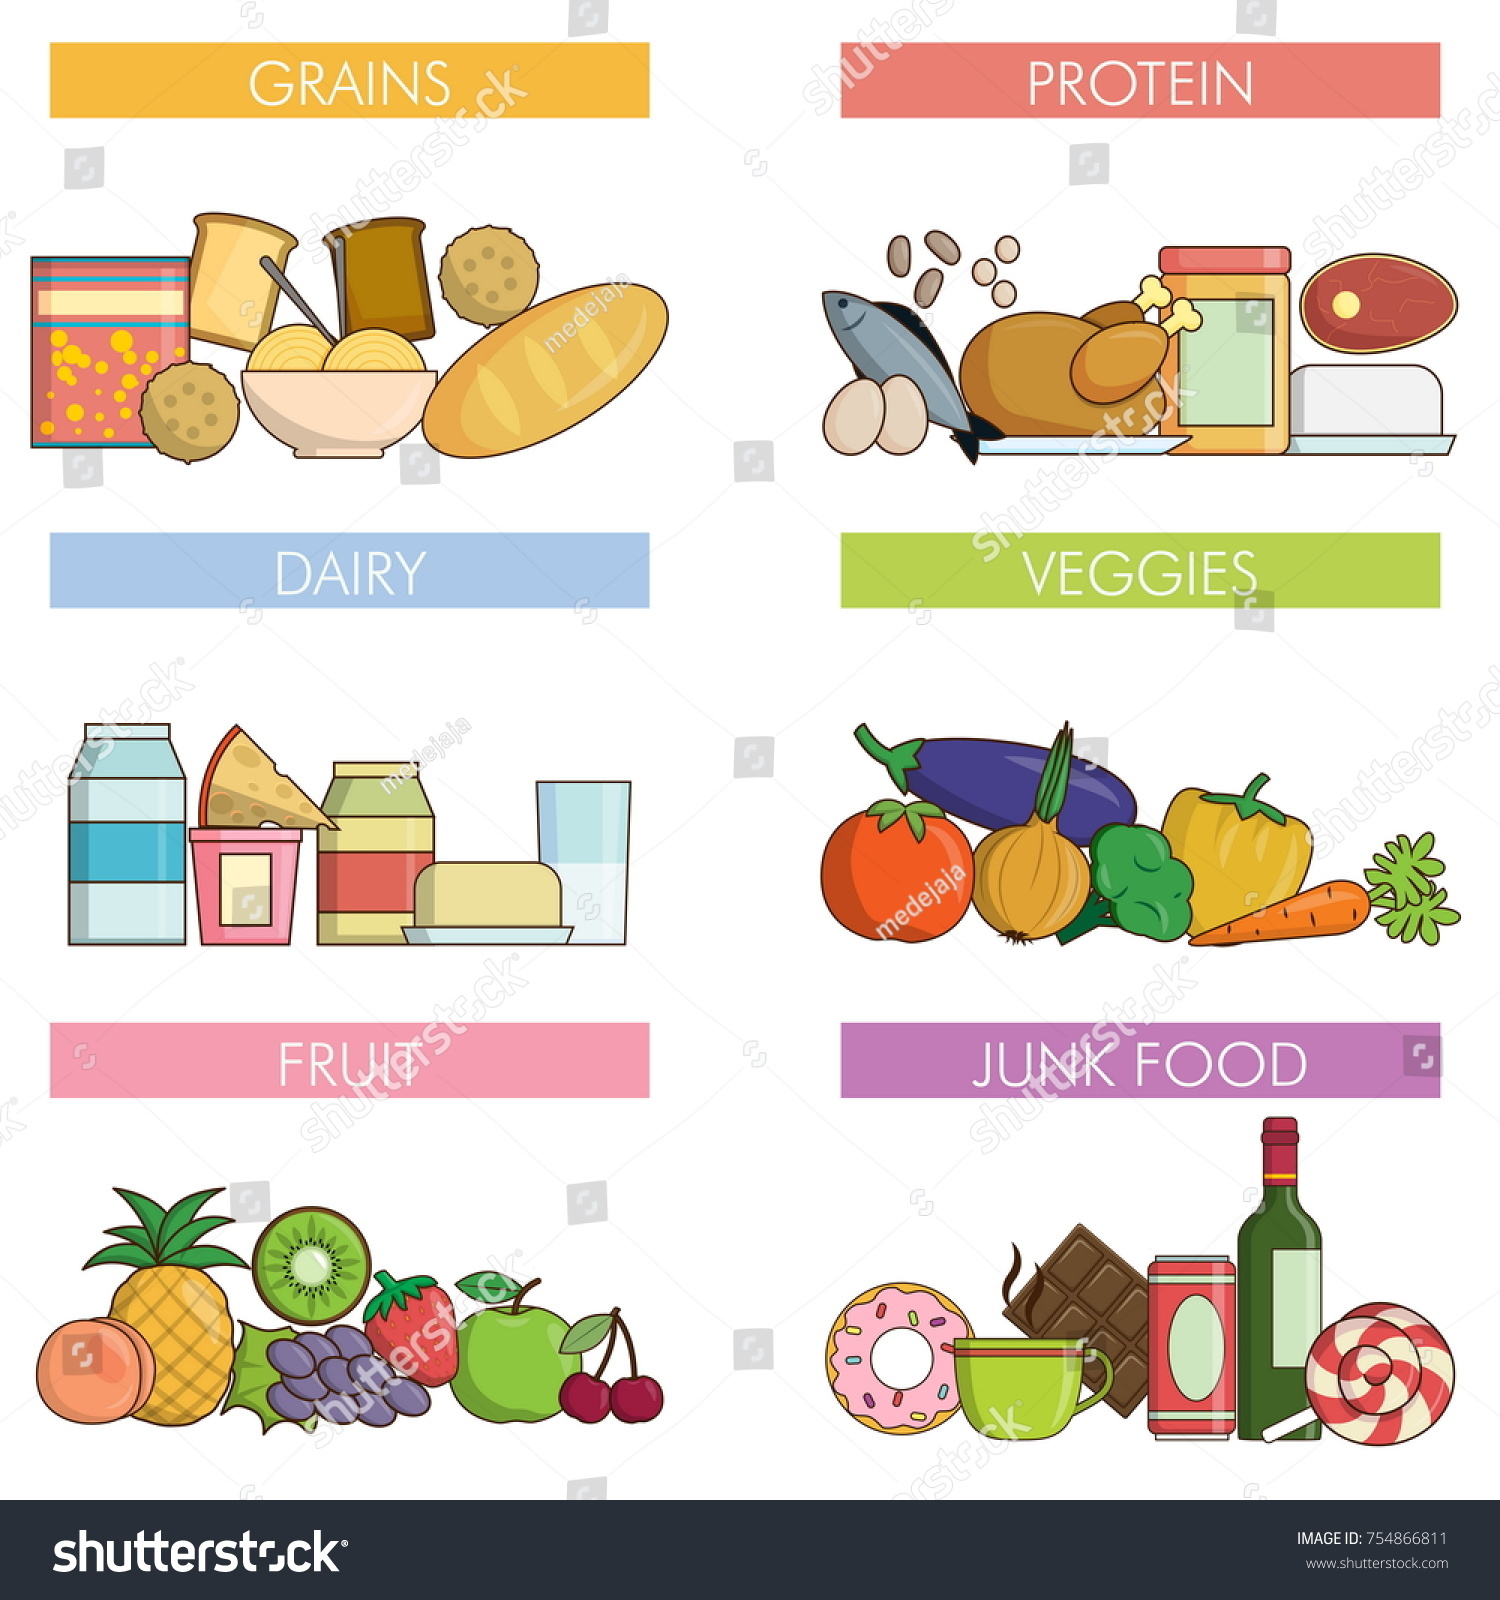 Fiber Fruits Vegetables Chart